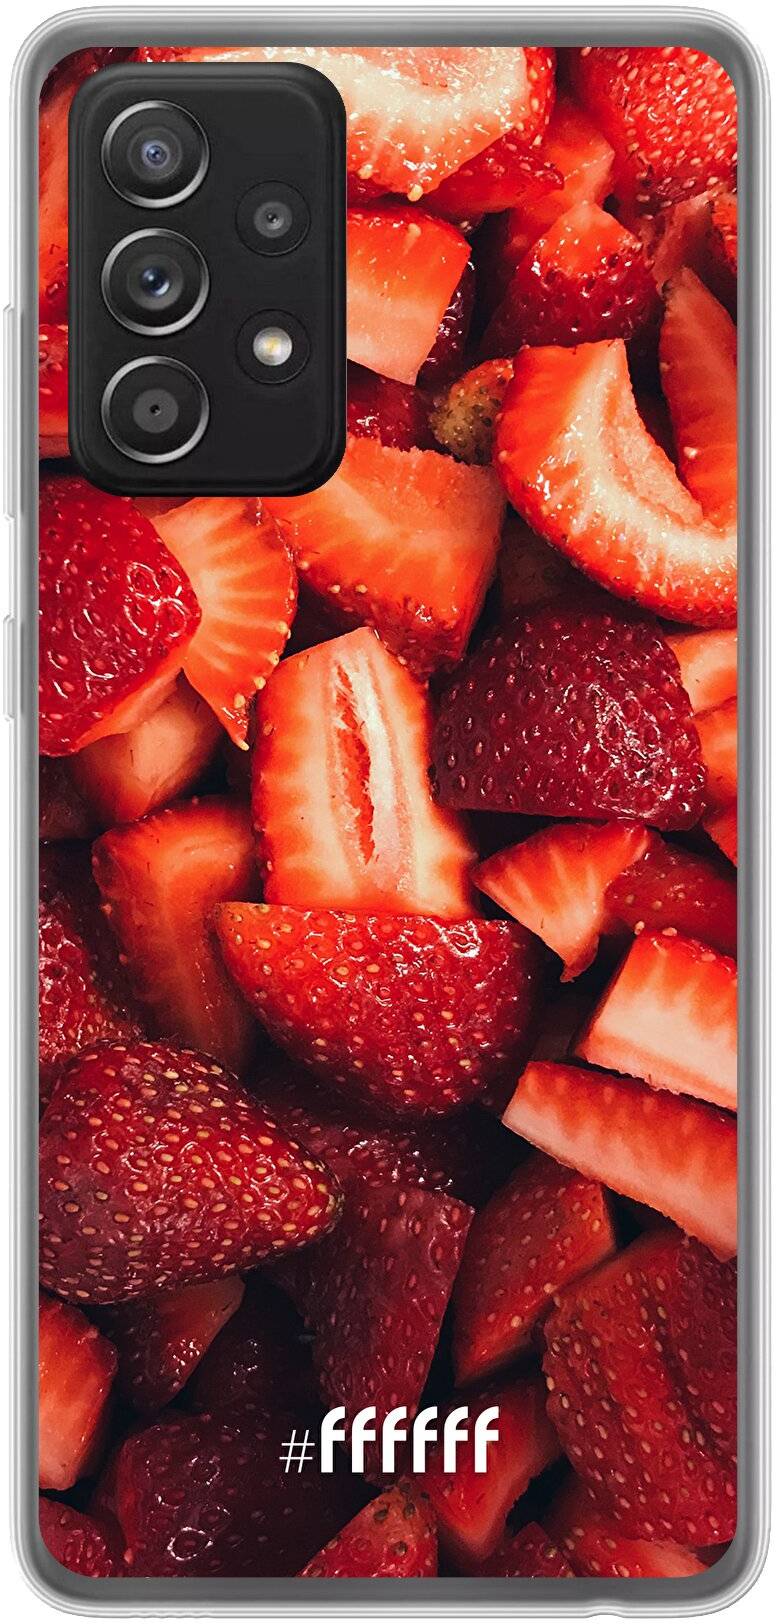 Strawberry Fields Galaxy A52